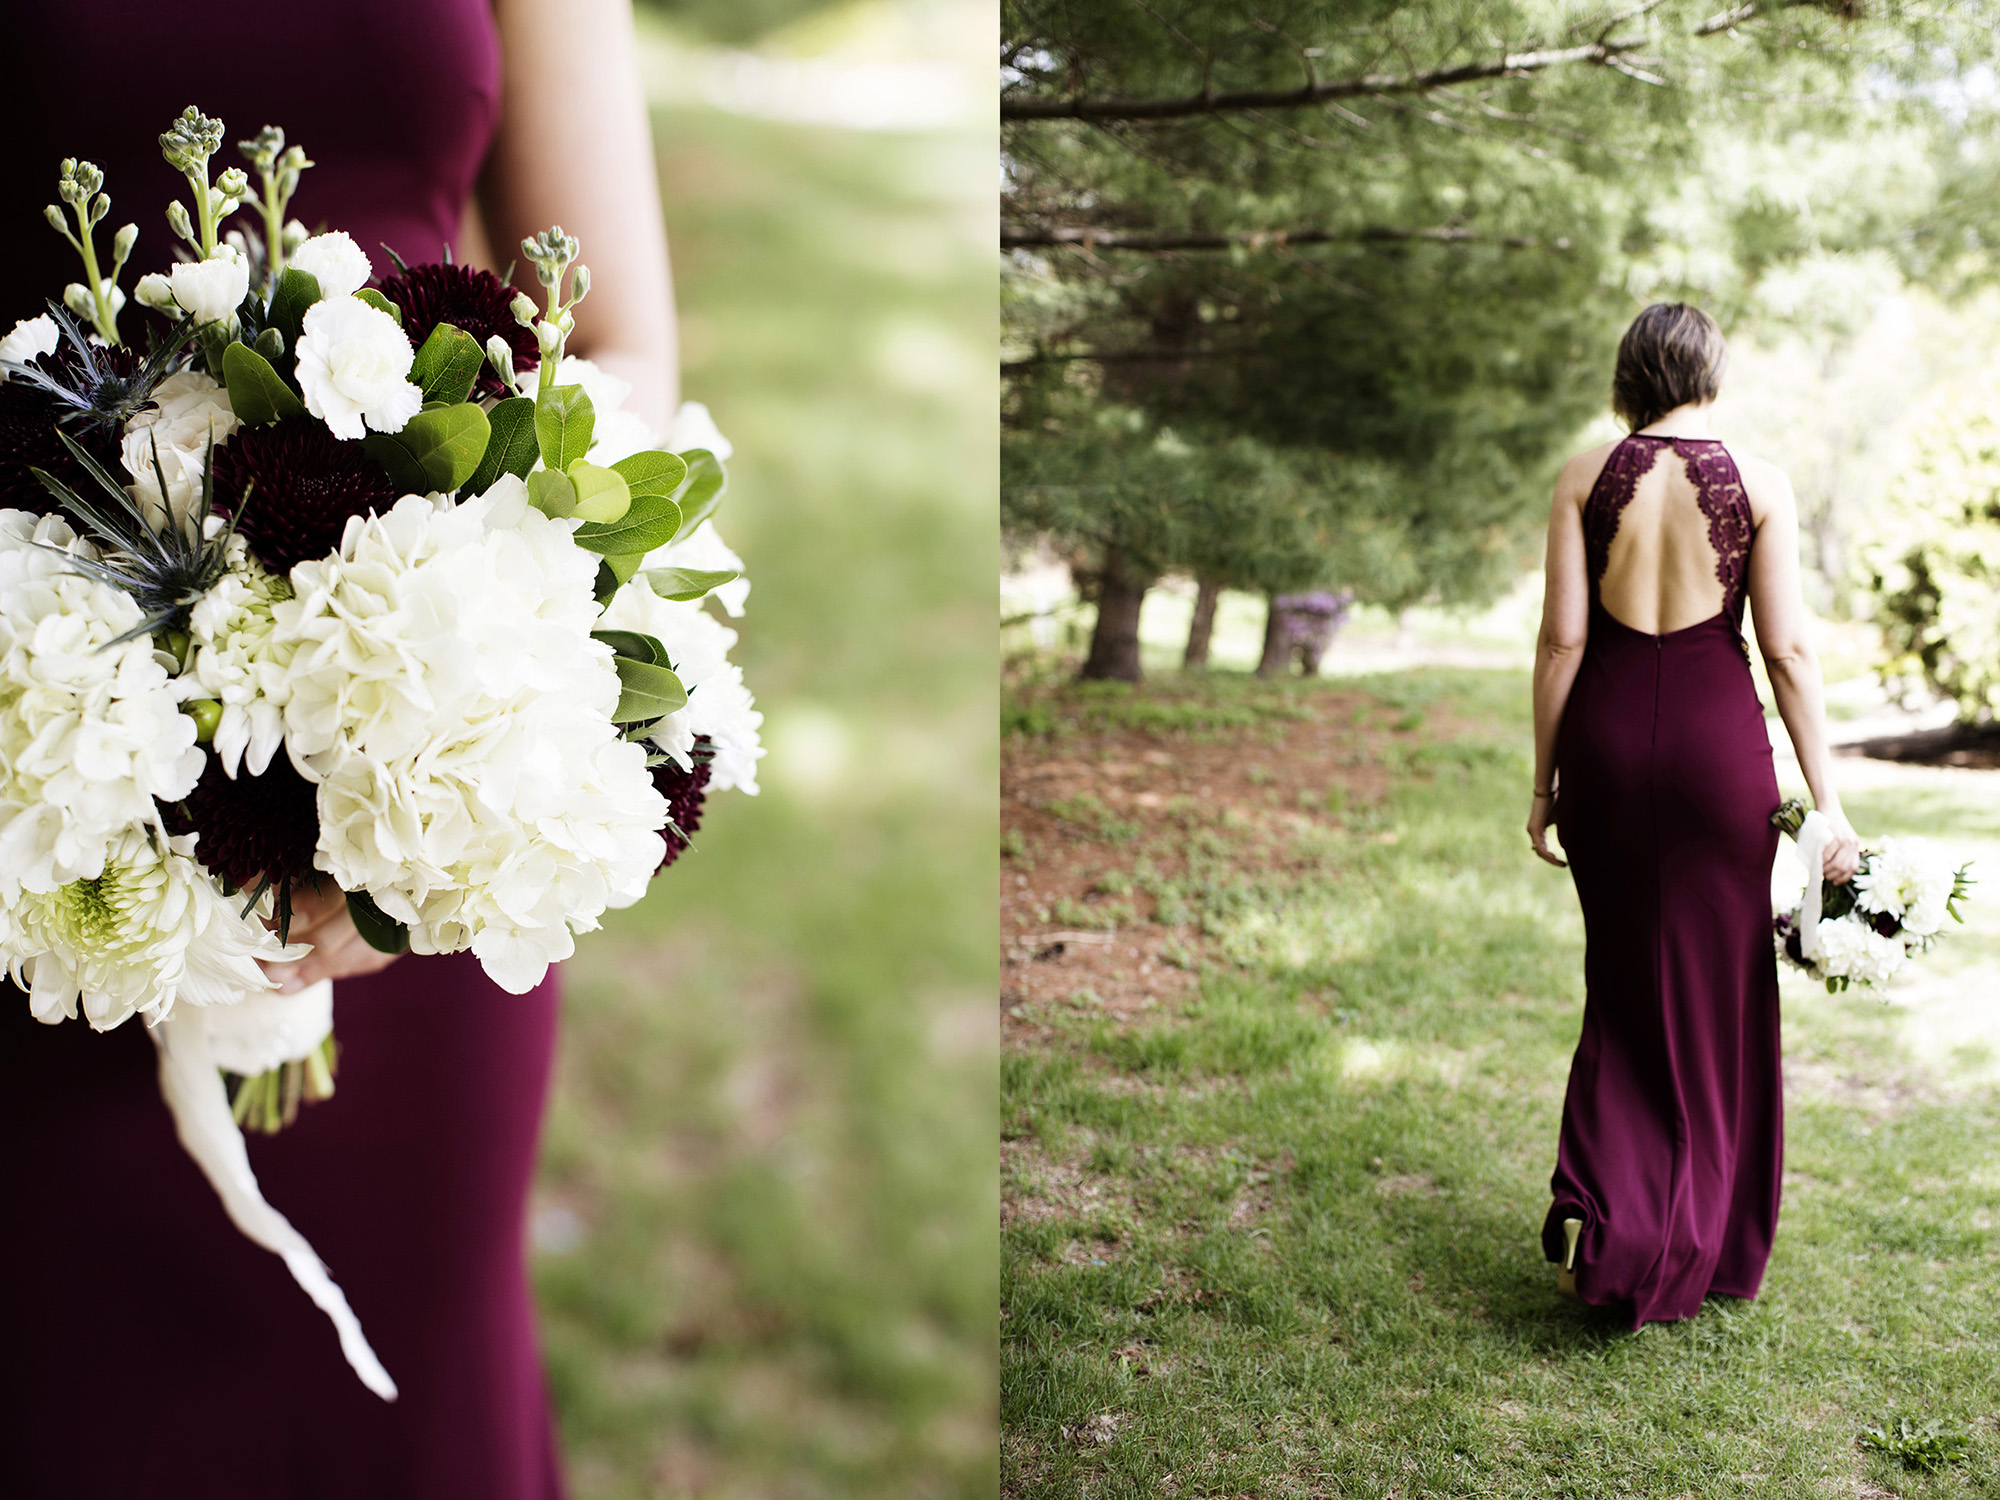 Wedding Photography MN | Photos by Photogen Inc. | Eliesa Johnson | Based in Minneapolis, Minnesota